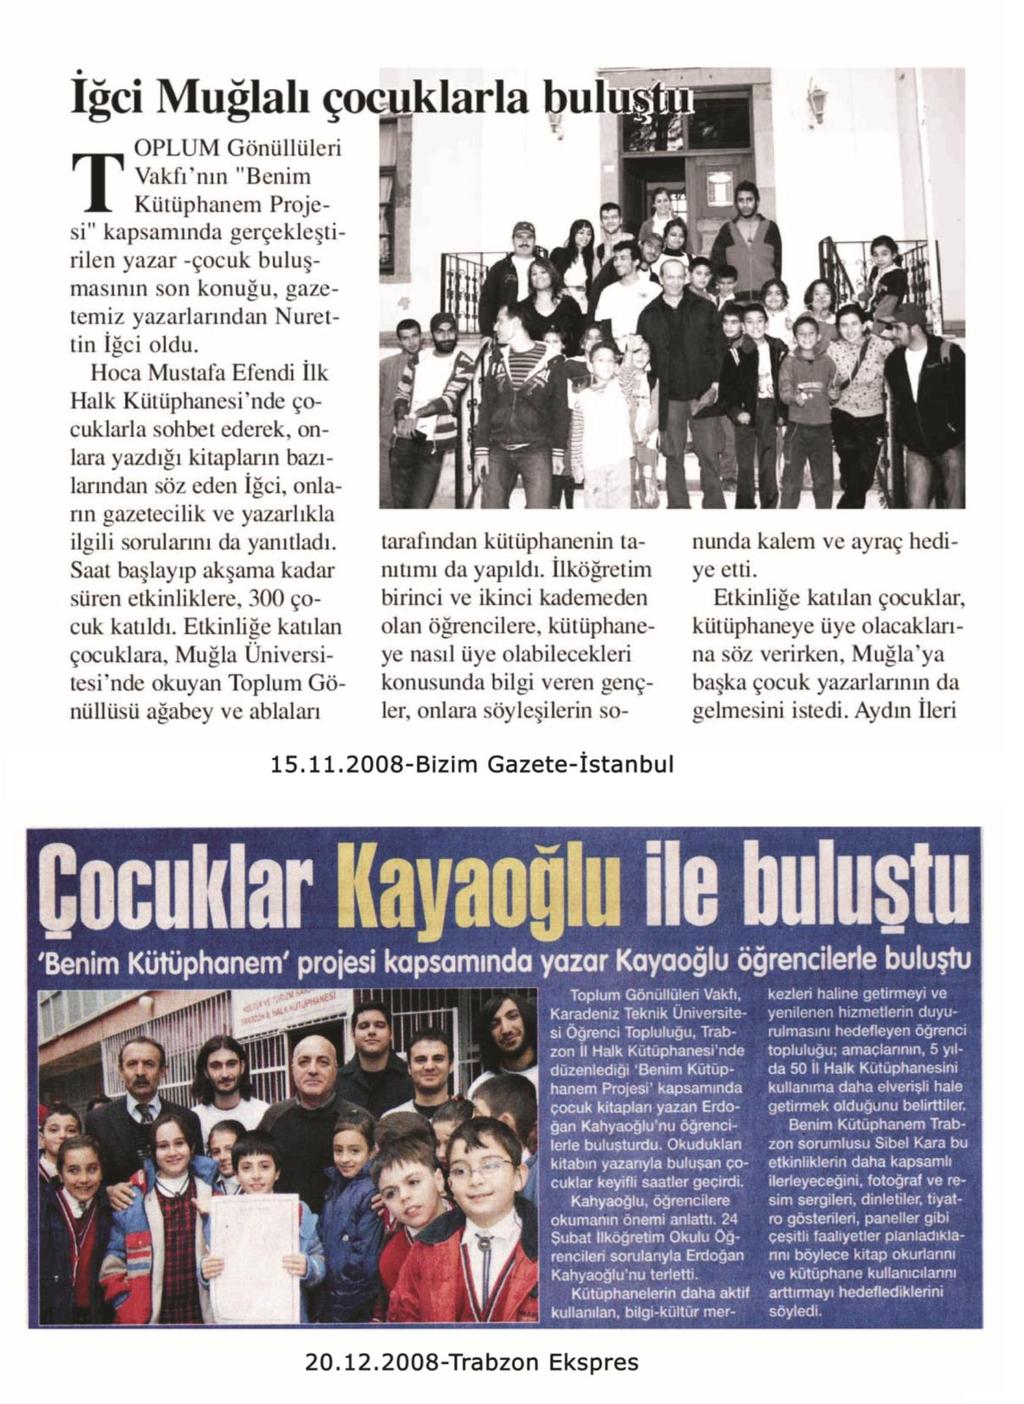 EK 11. Bizim Gazete (15.11.2008) ve Trabzon Ekspres (20.